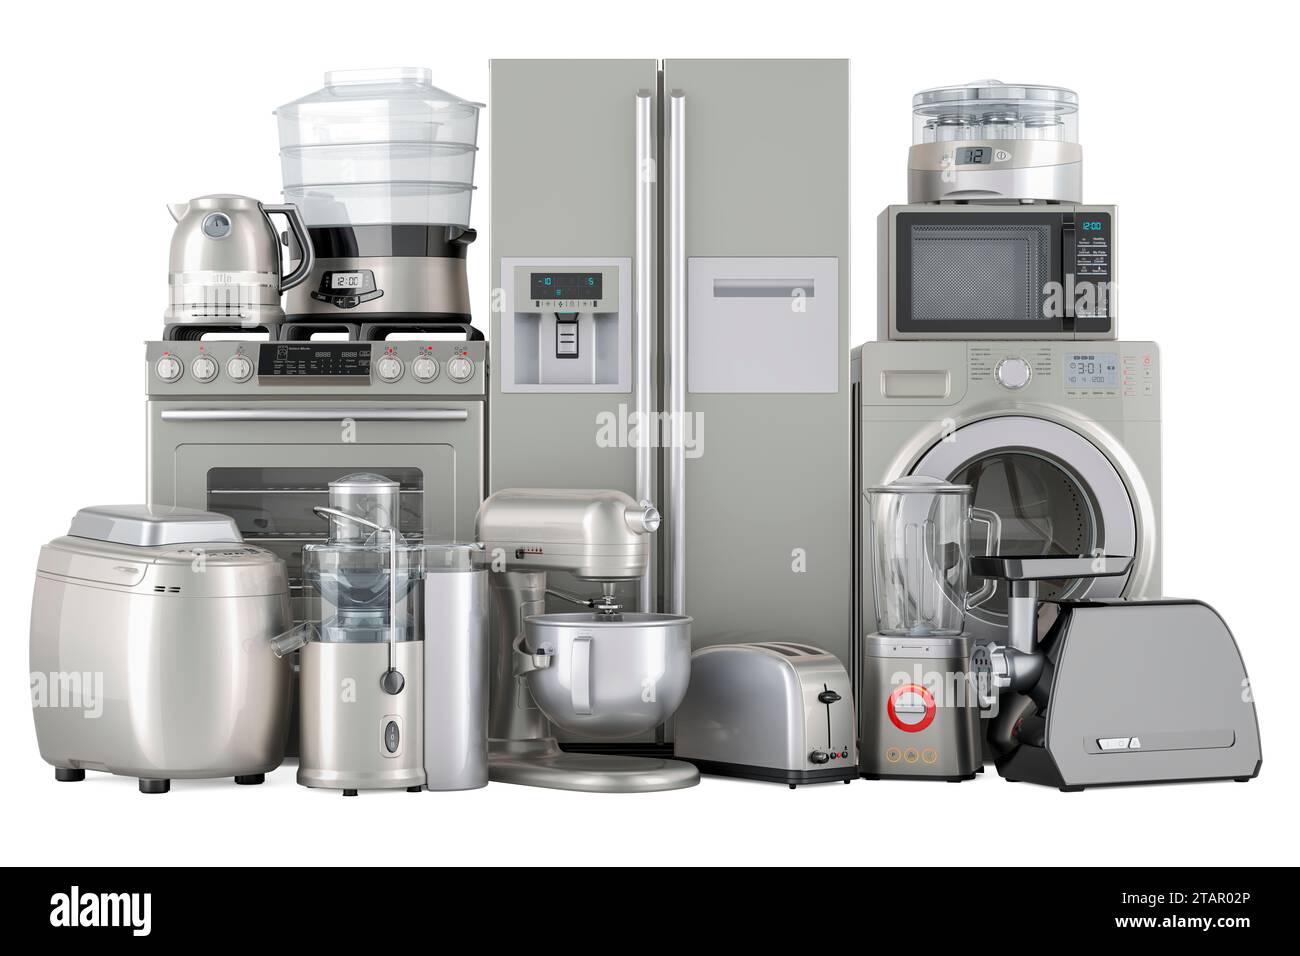 https://c8.alamy.com/comp/2TAR02P/set-of-kitchen-appliances-silver-color-toaster-kettle-mixer-gas-stove-washing-machine-blender-yogurt-maker-steamer-juicer-refrigerator-mic-2TAR02P.jpg